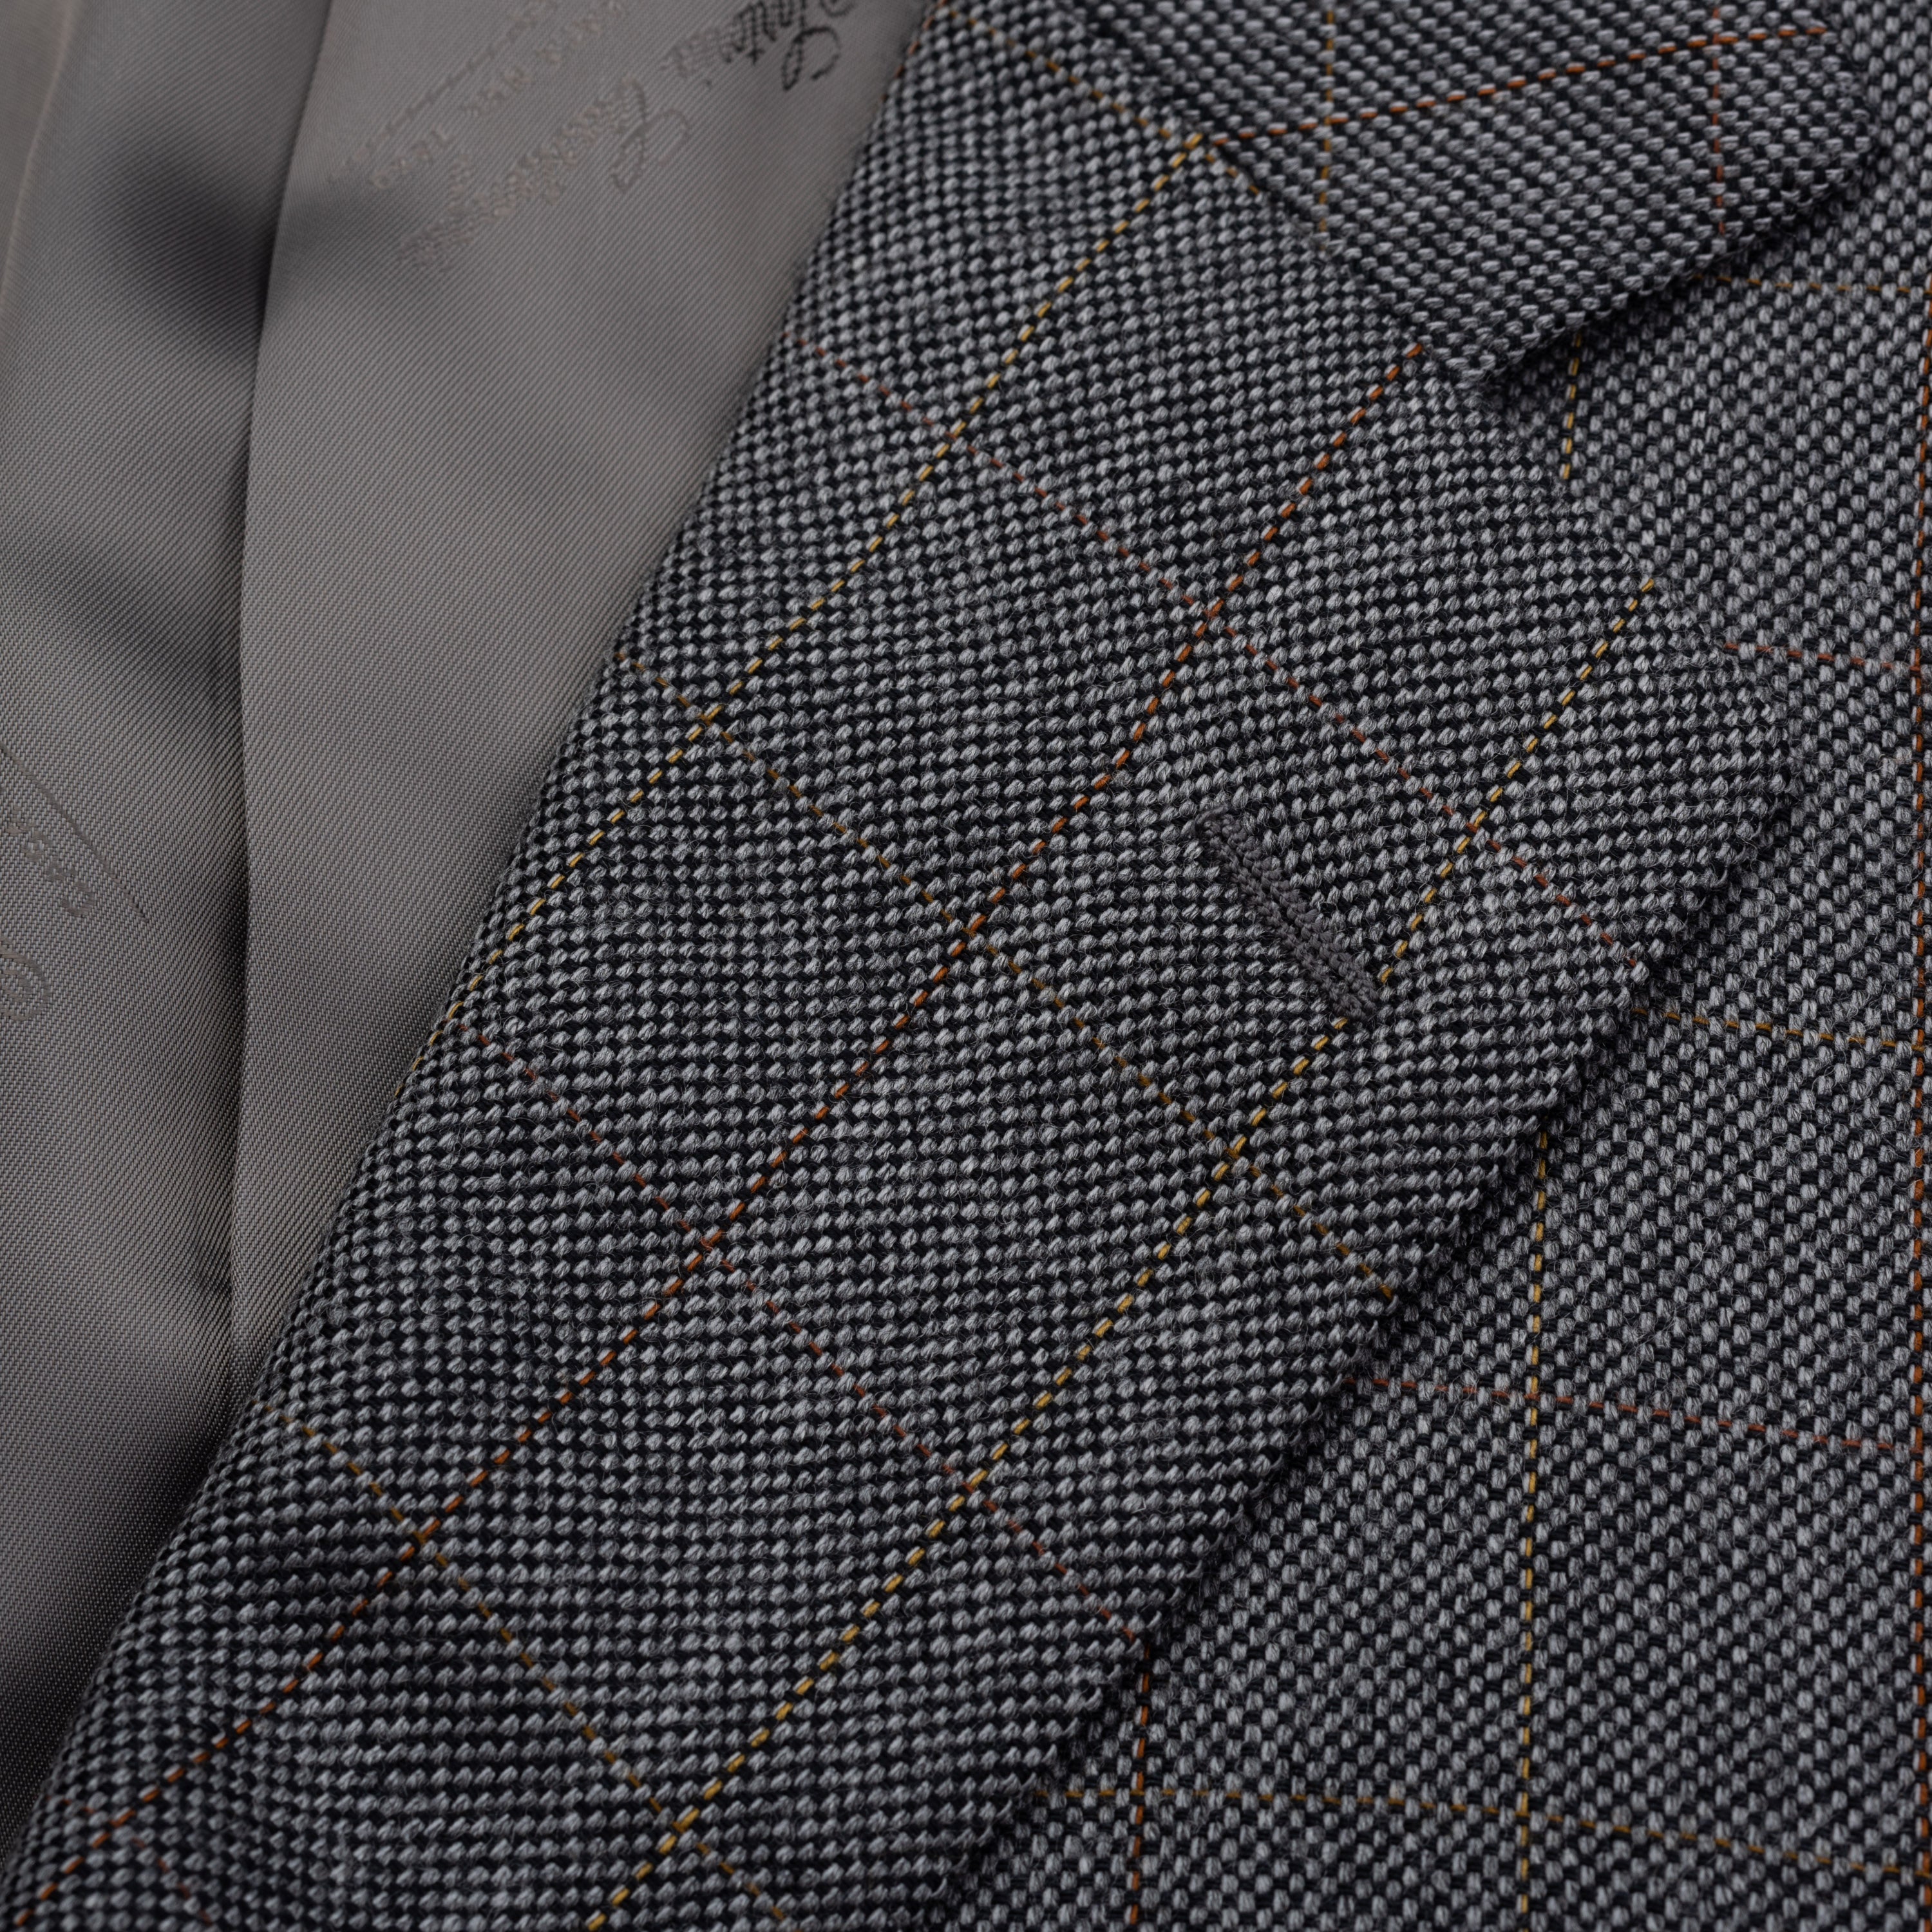 SARTORIA CASTANGIA Handmade Gray Wool Sport Coat Jacket EU 50 NEW US 40 CASTANGIA